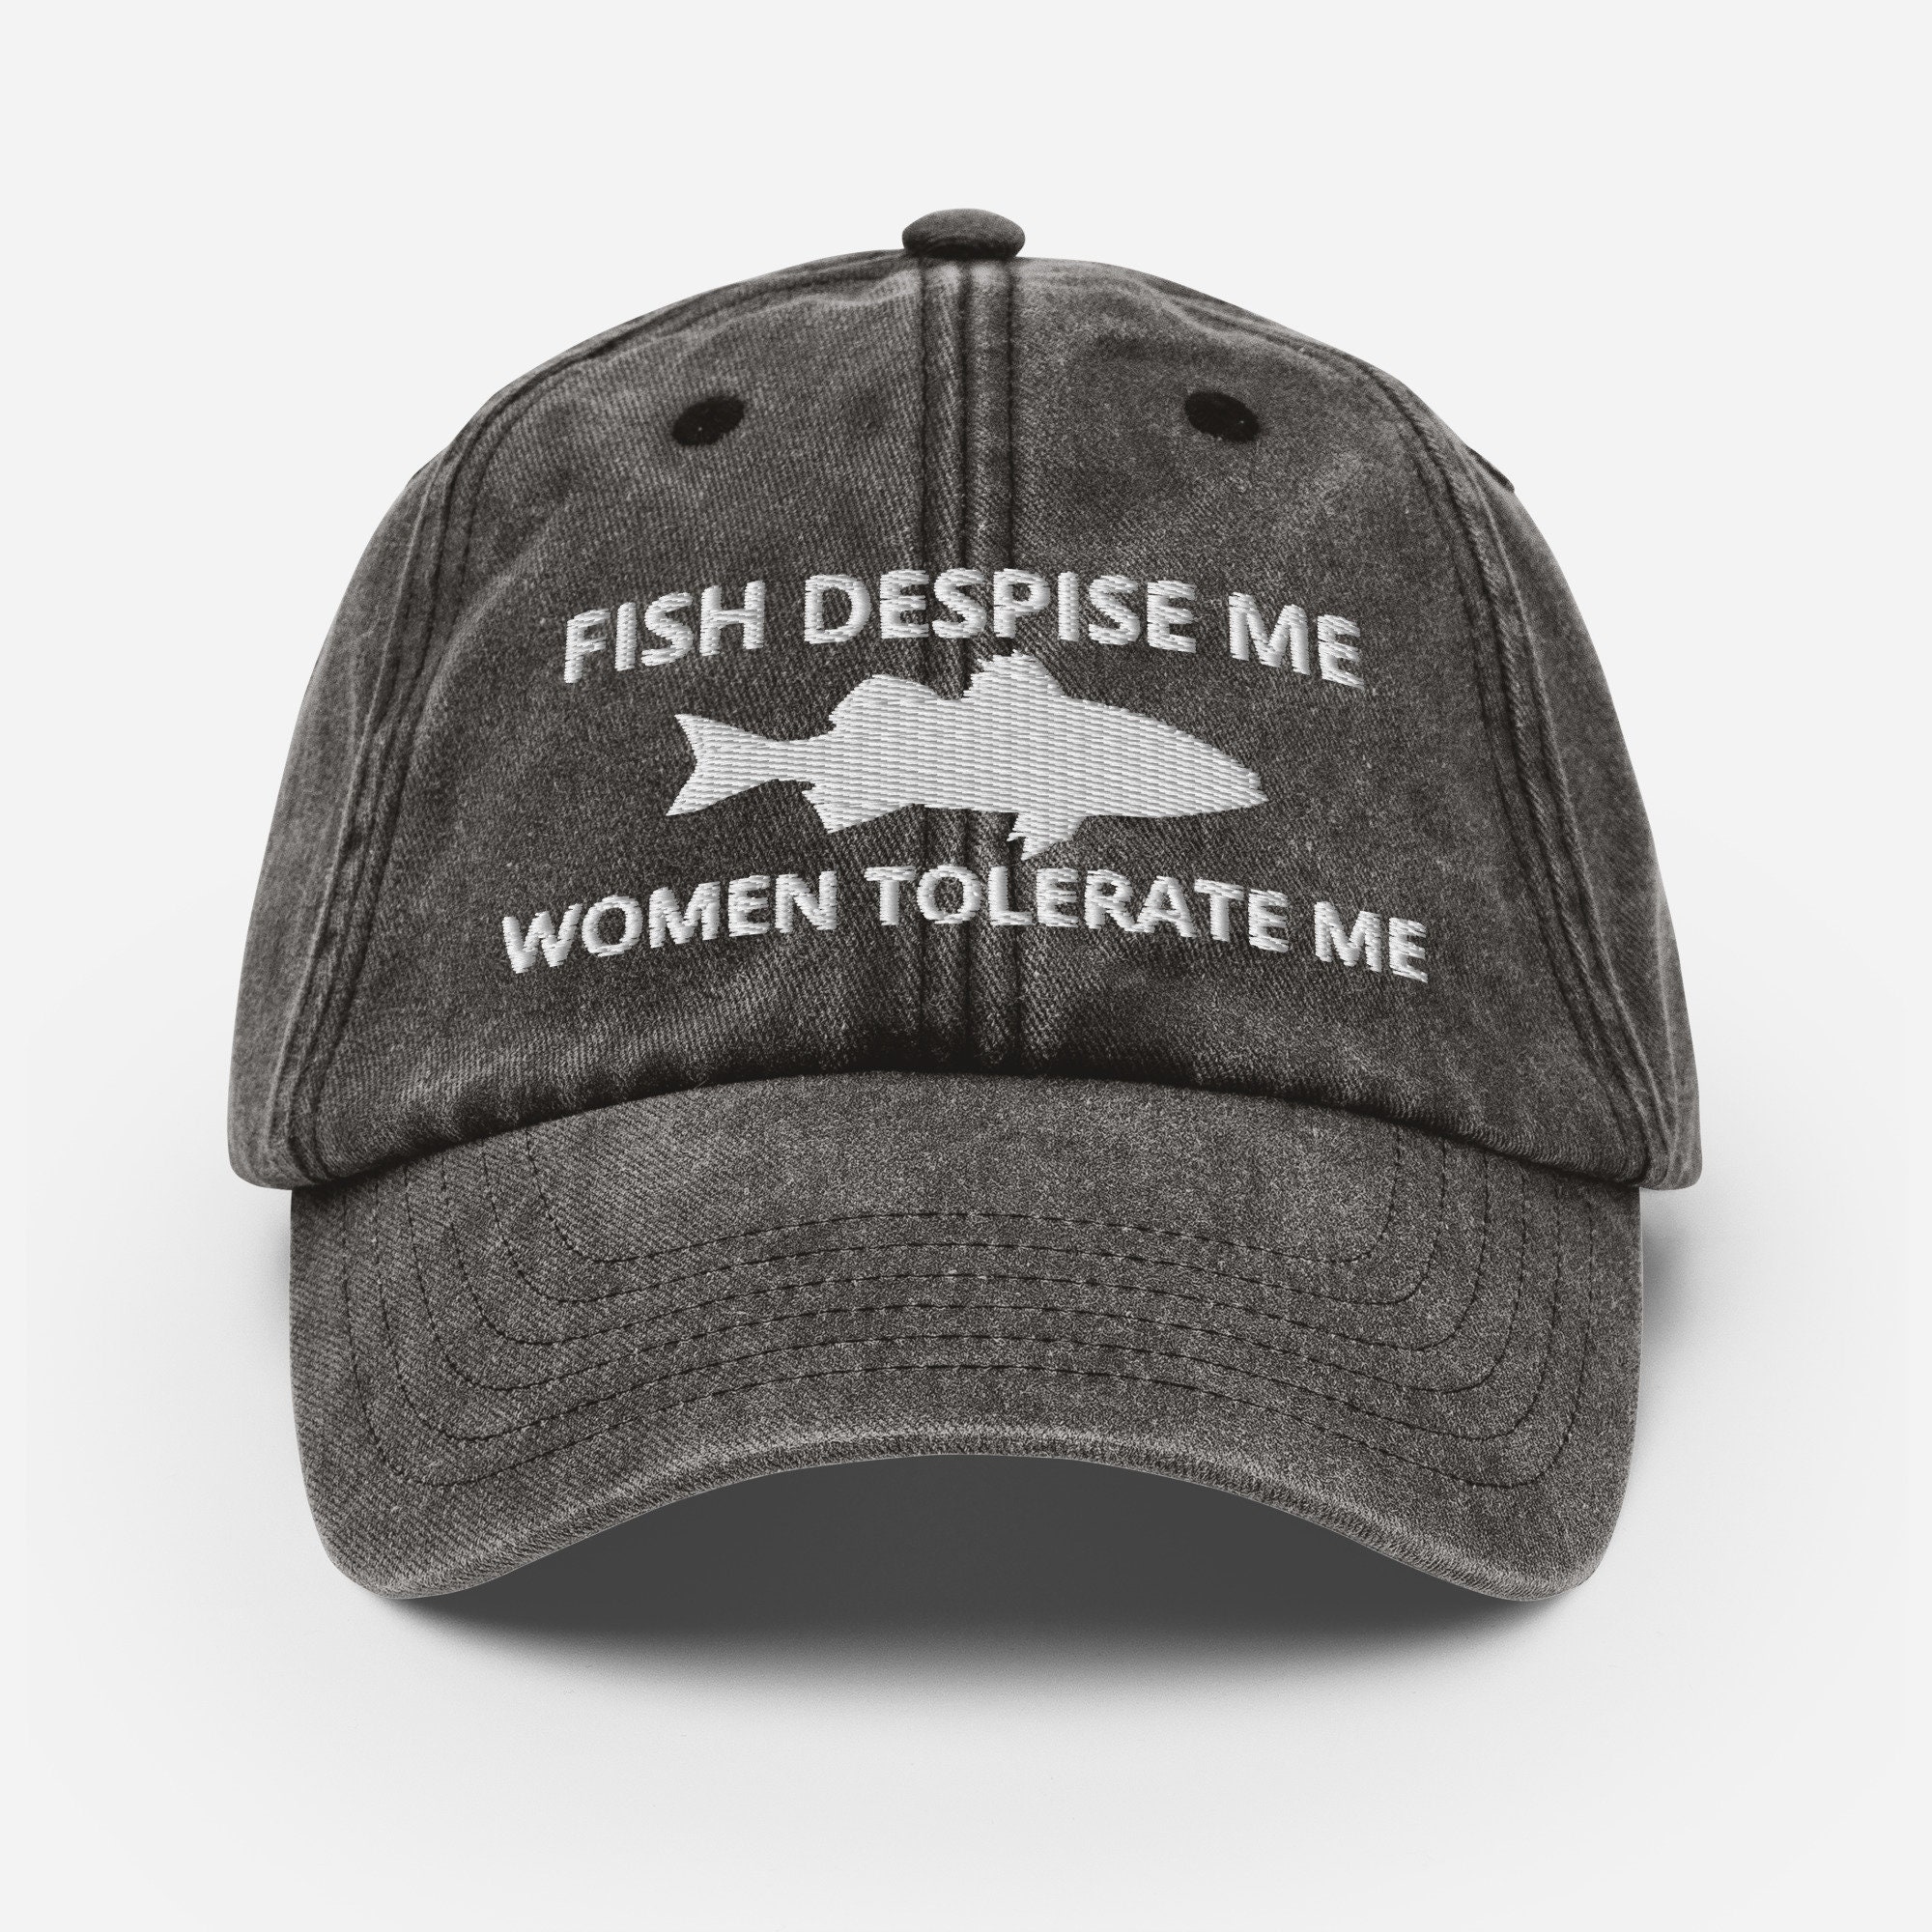 Funny Fishing Hat, Fish Despise Me Women Tolerate Me, Red Fishing Hat